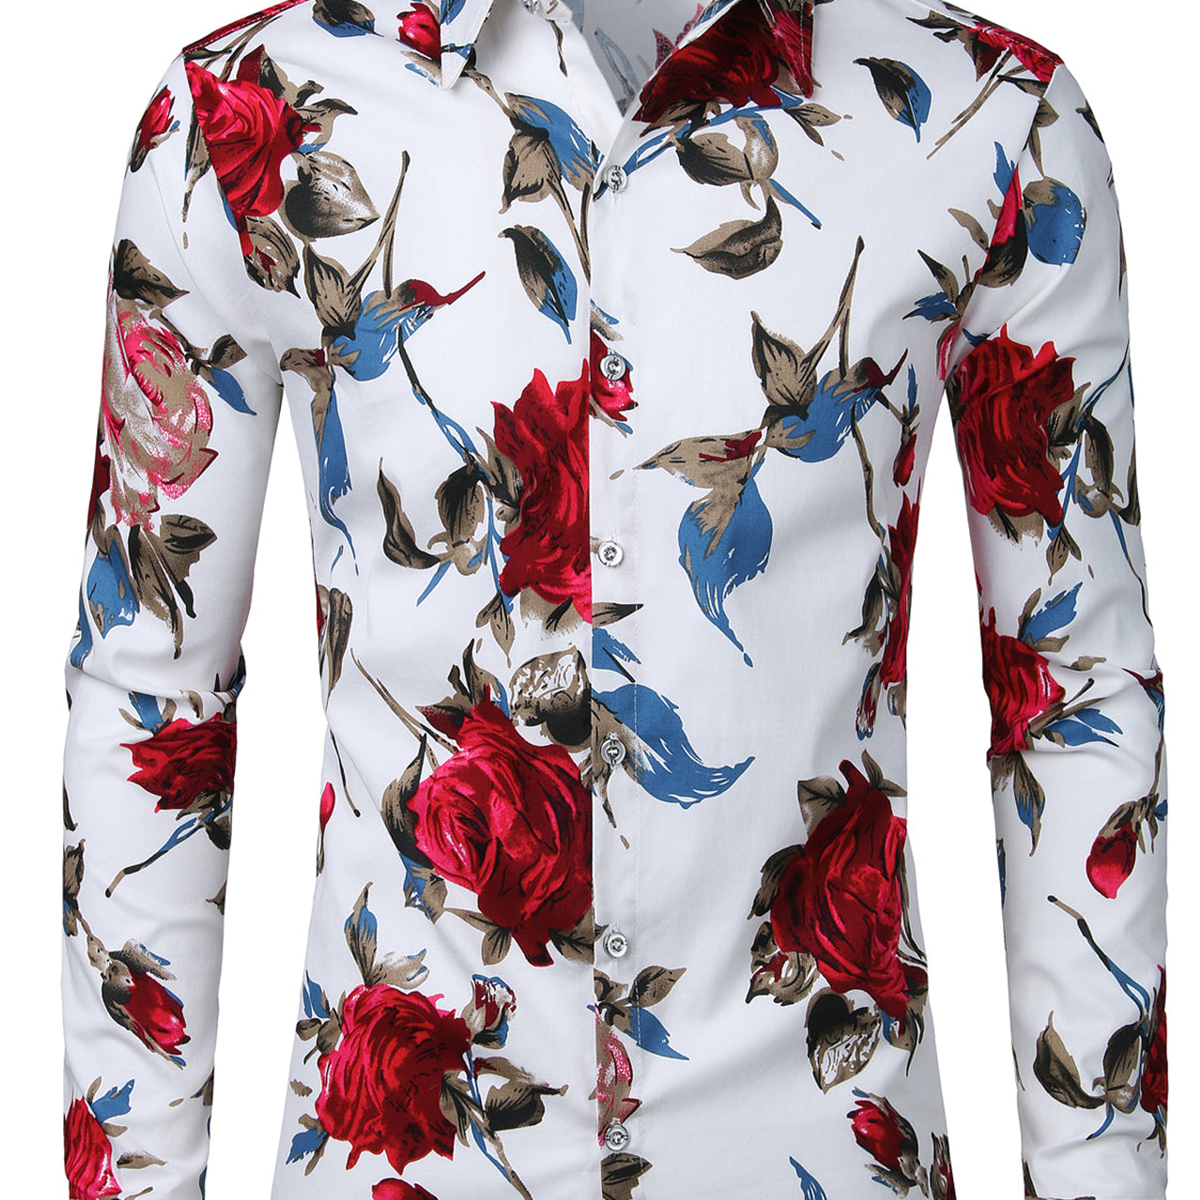 Men's Floral Print Long Sleeve Cotton Casual Button Up Dress Shirt